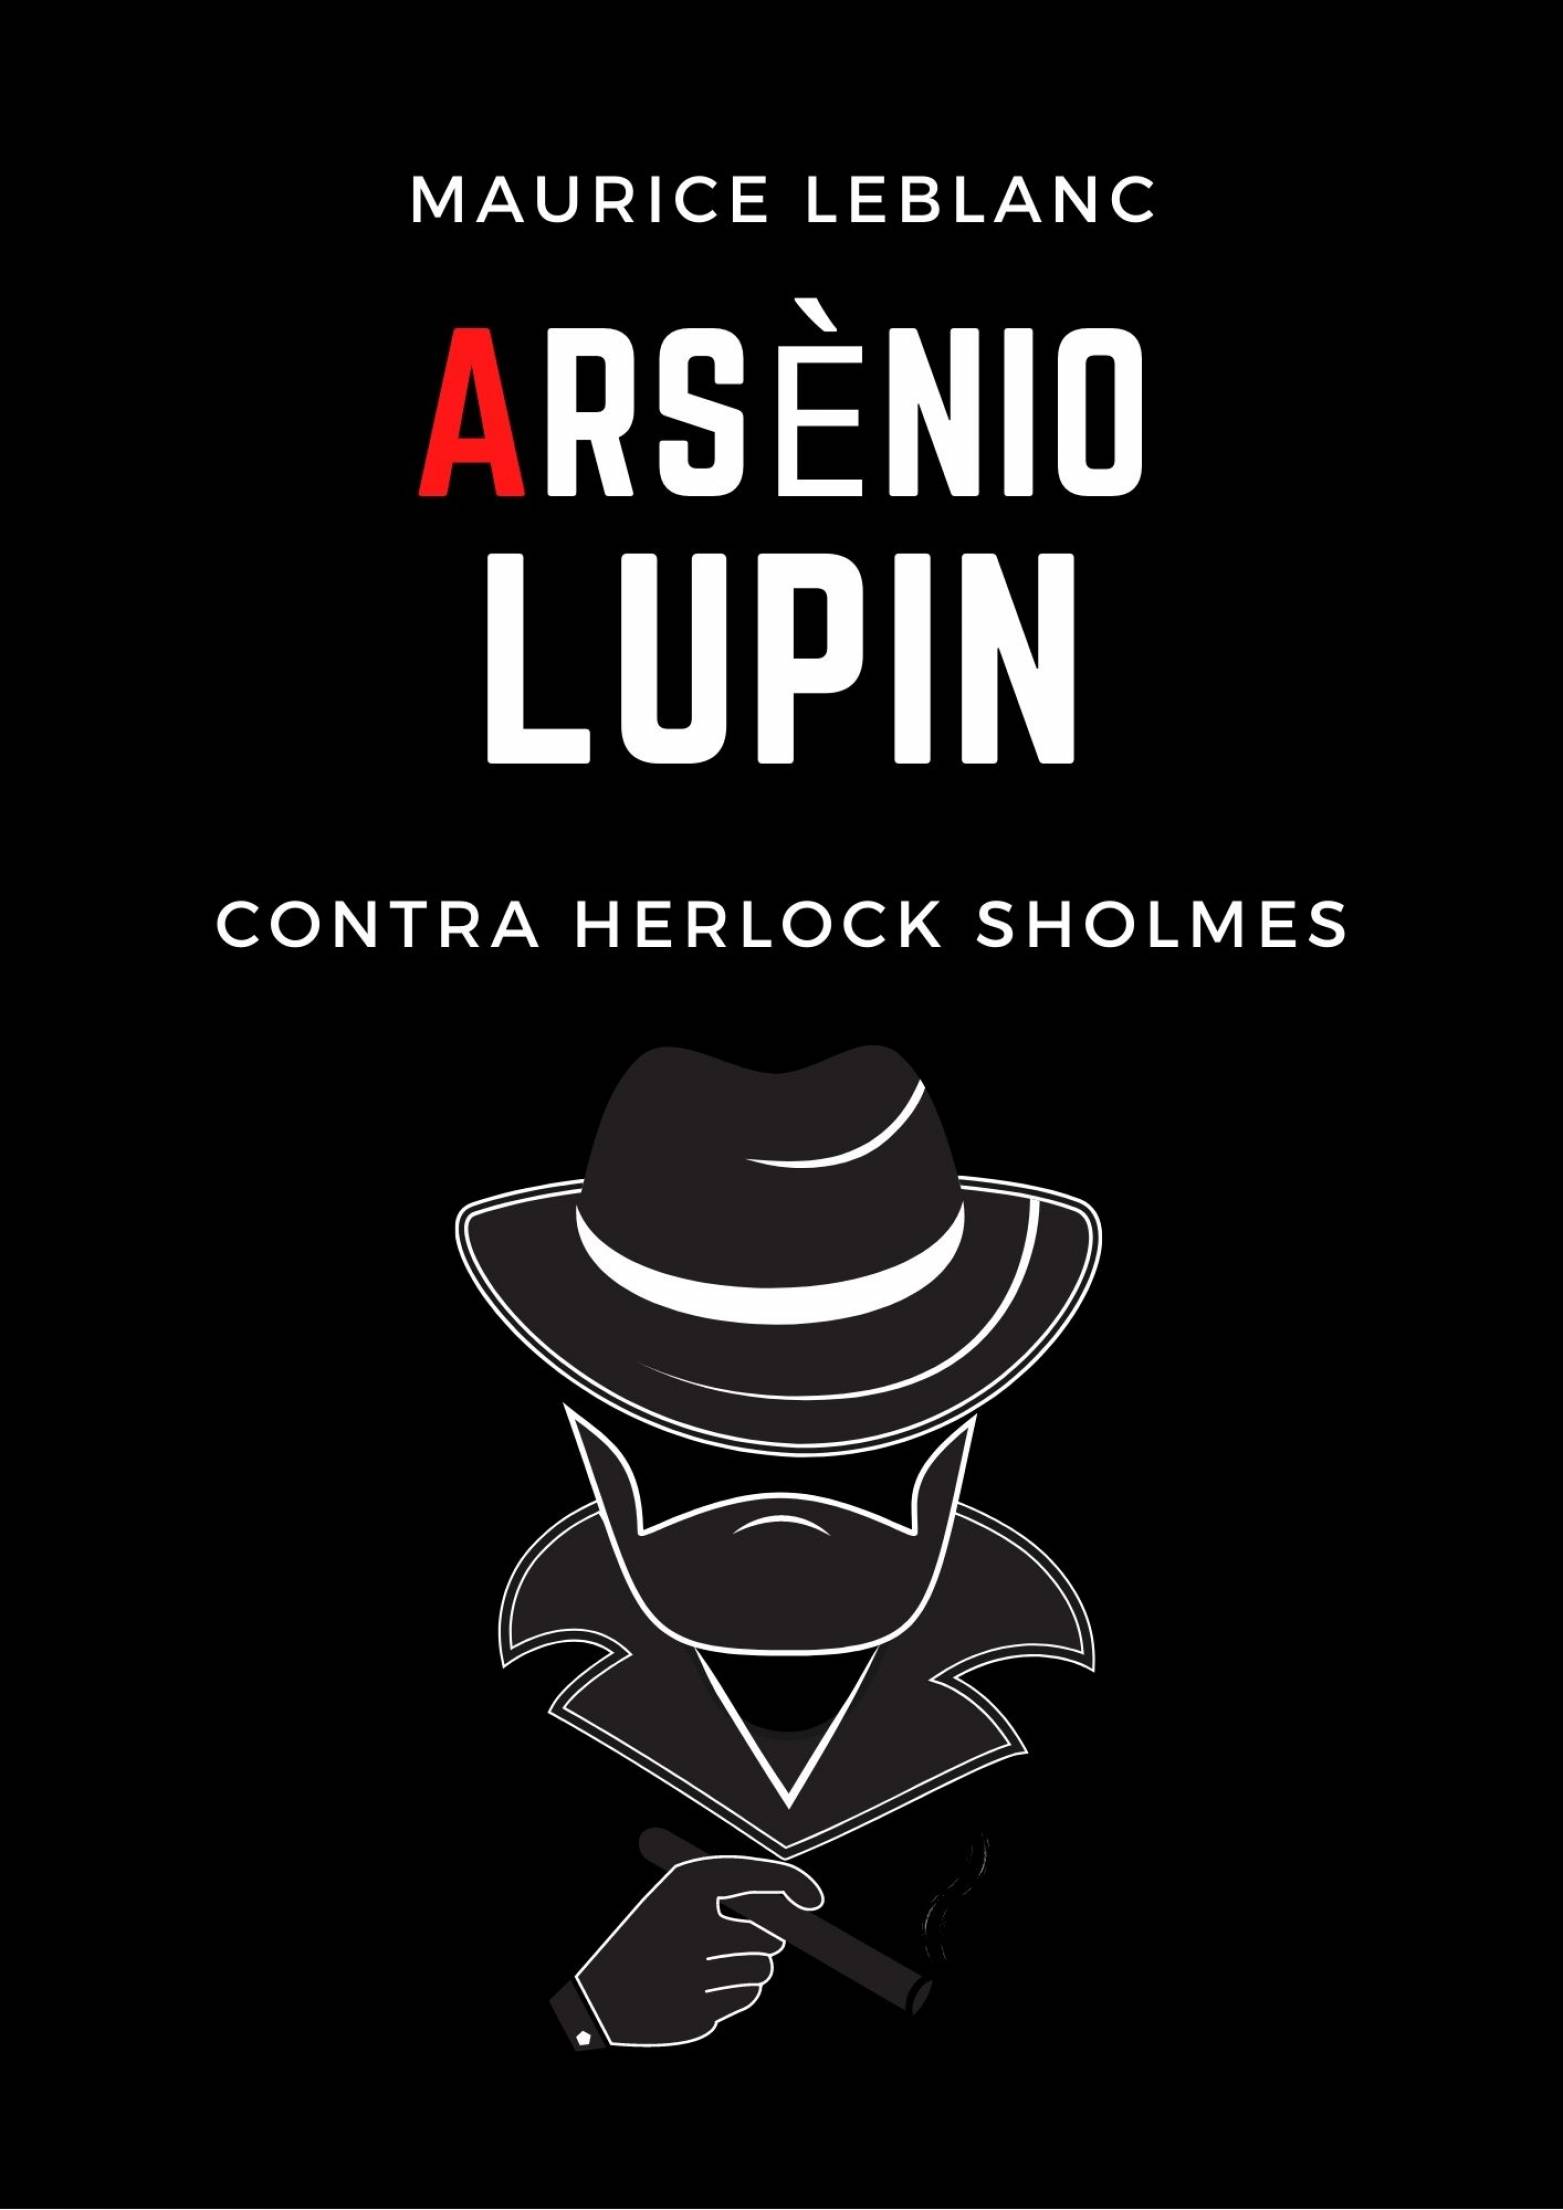 Arsenio Lupin contra Herlock Sholmes by: Maurice Leblanc - 9781071592663